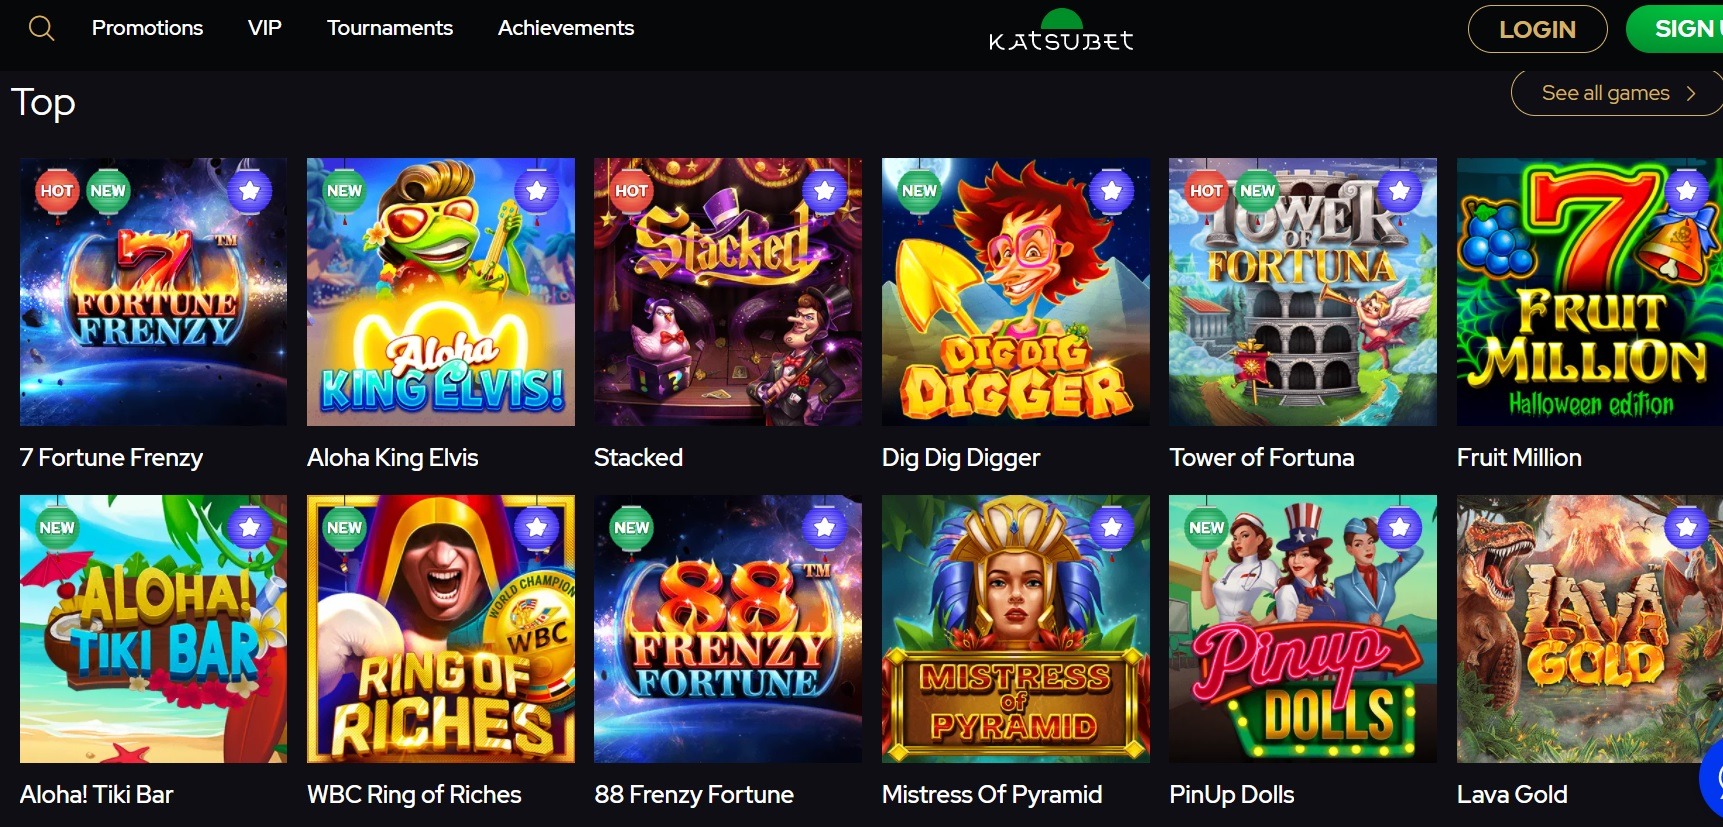 Katsubet Casino Games